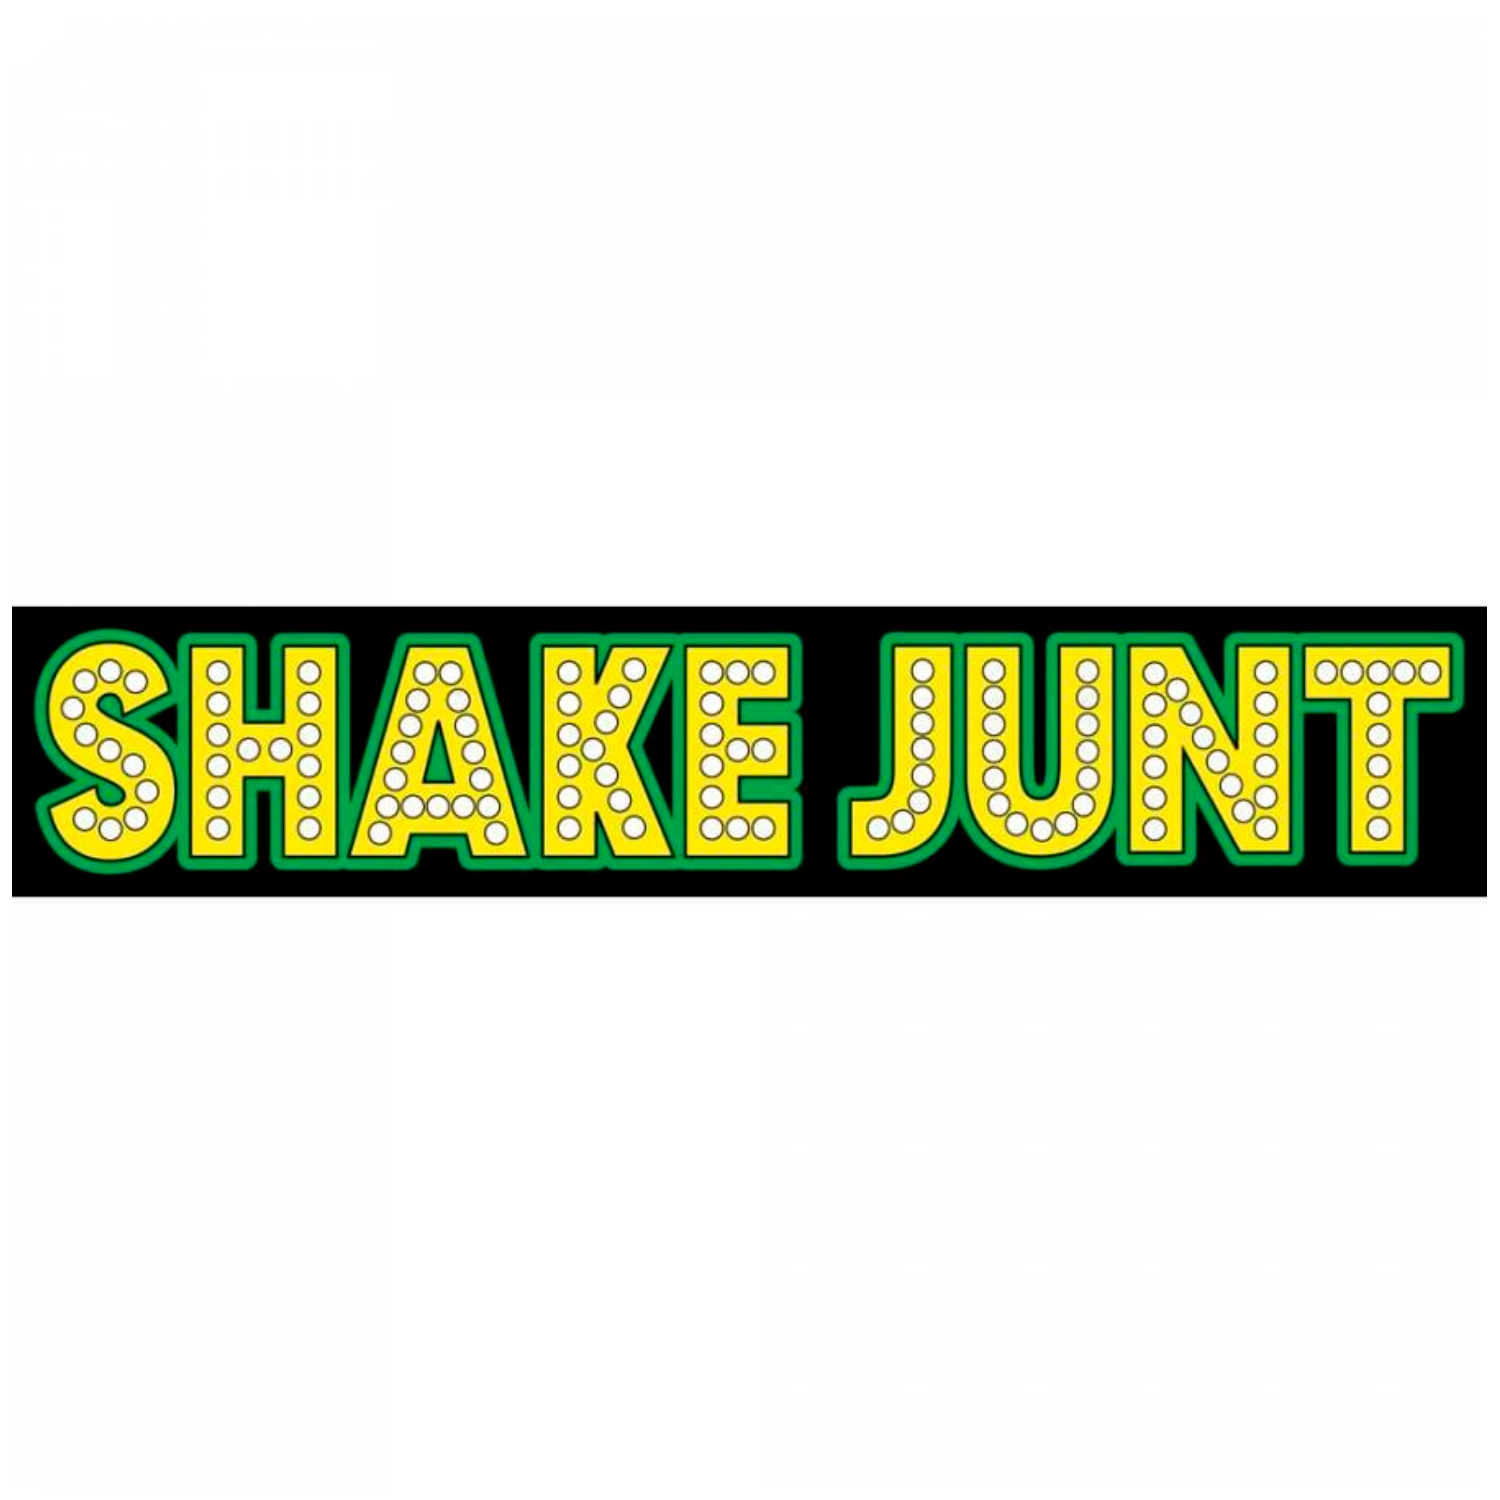 Sticker Shake Junt Logo black